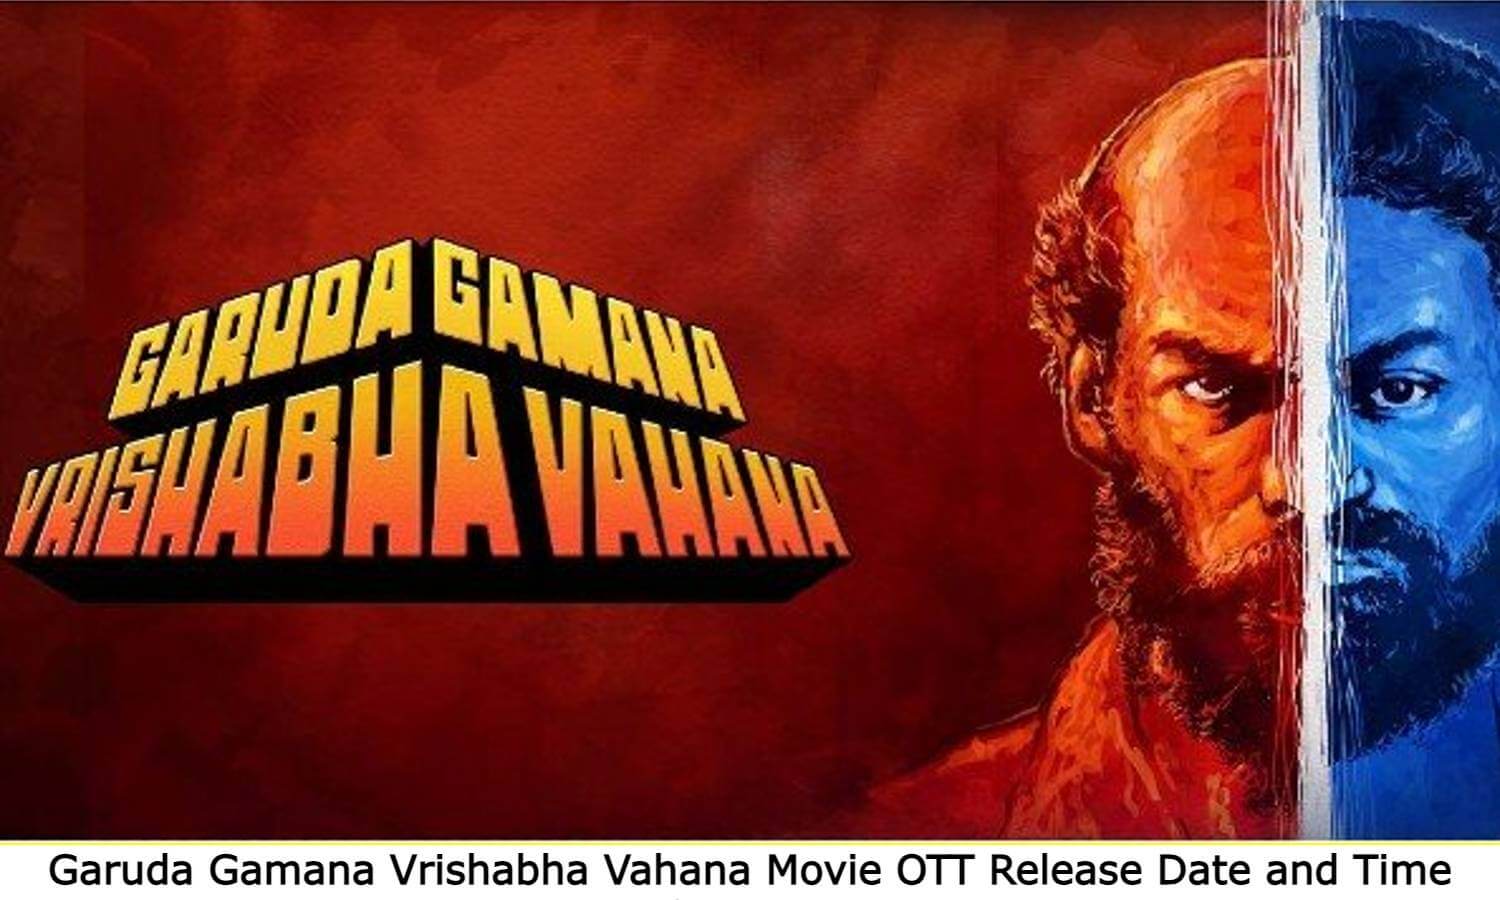 Garuda Gamana Vrishabha Vahana Movie OTT Release Date and Time Confirmed 2022